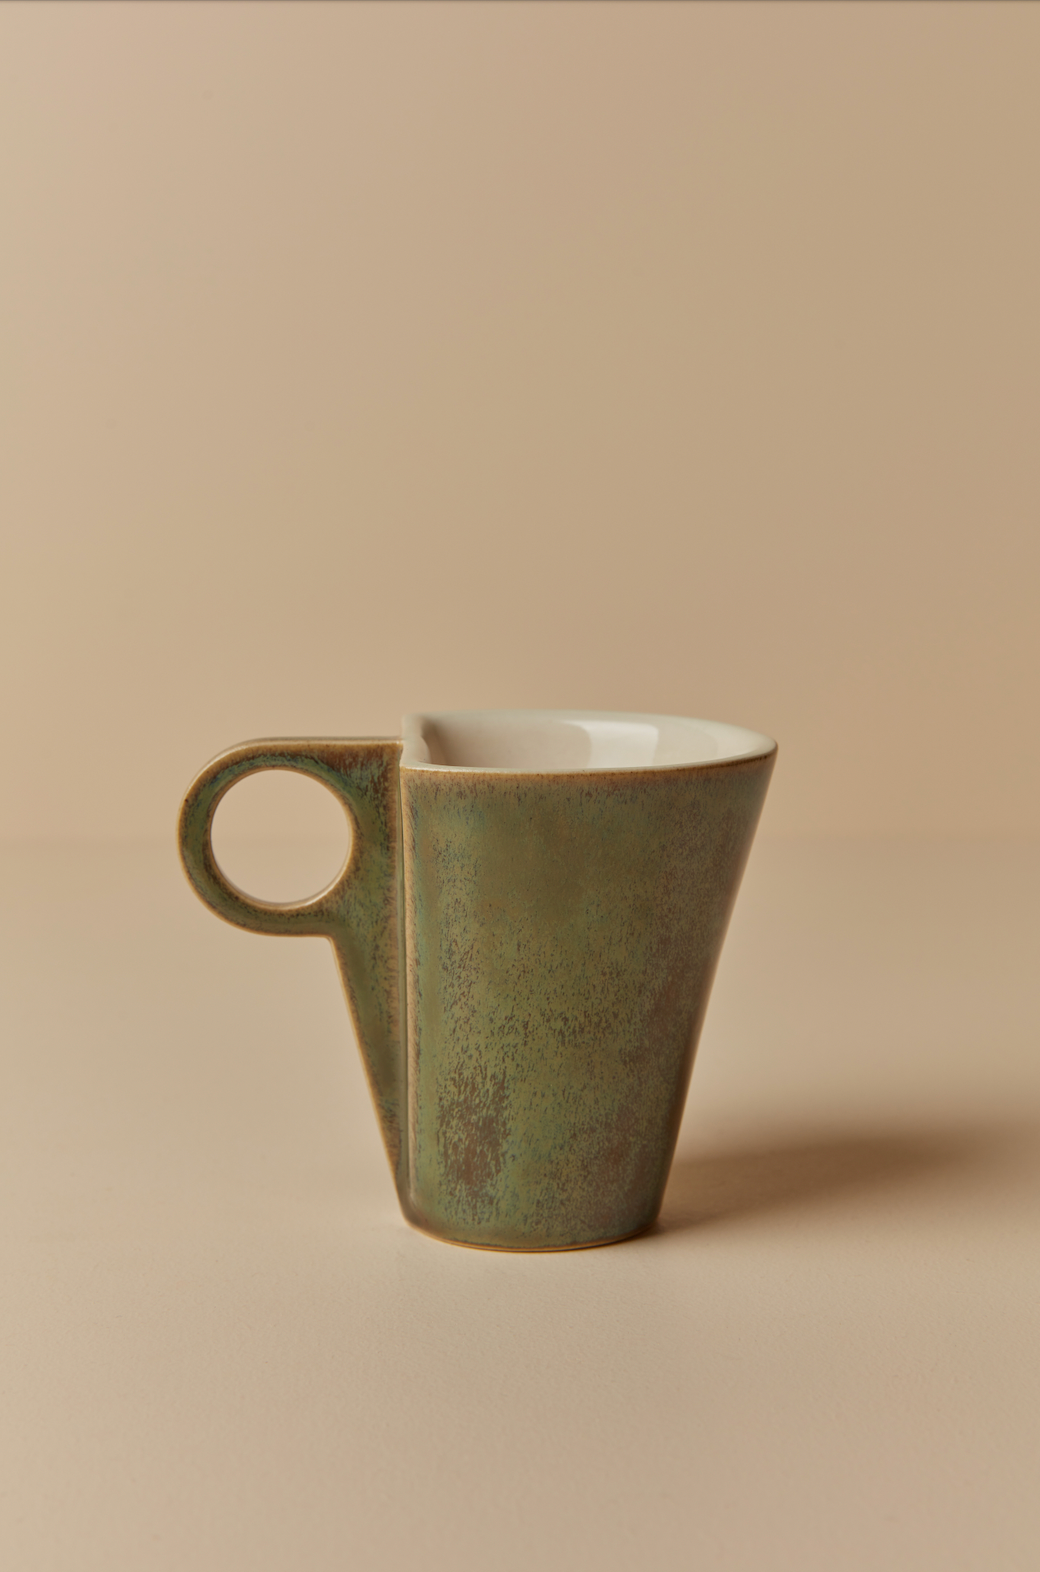 Yuro Cuchor – Large Deco Mug, Iridescent Green and Cream